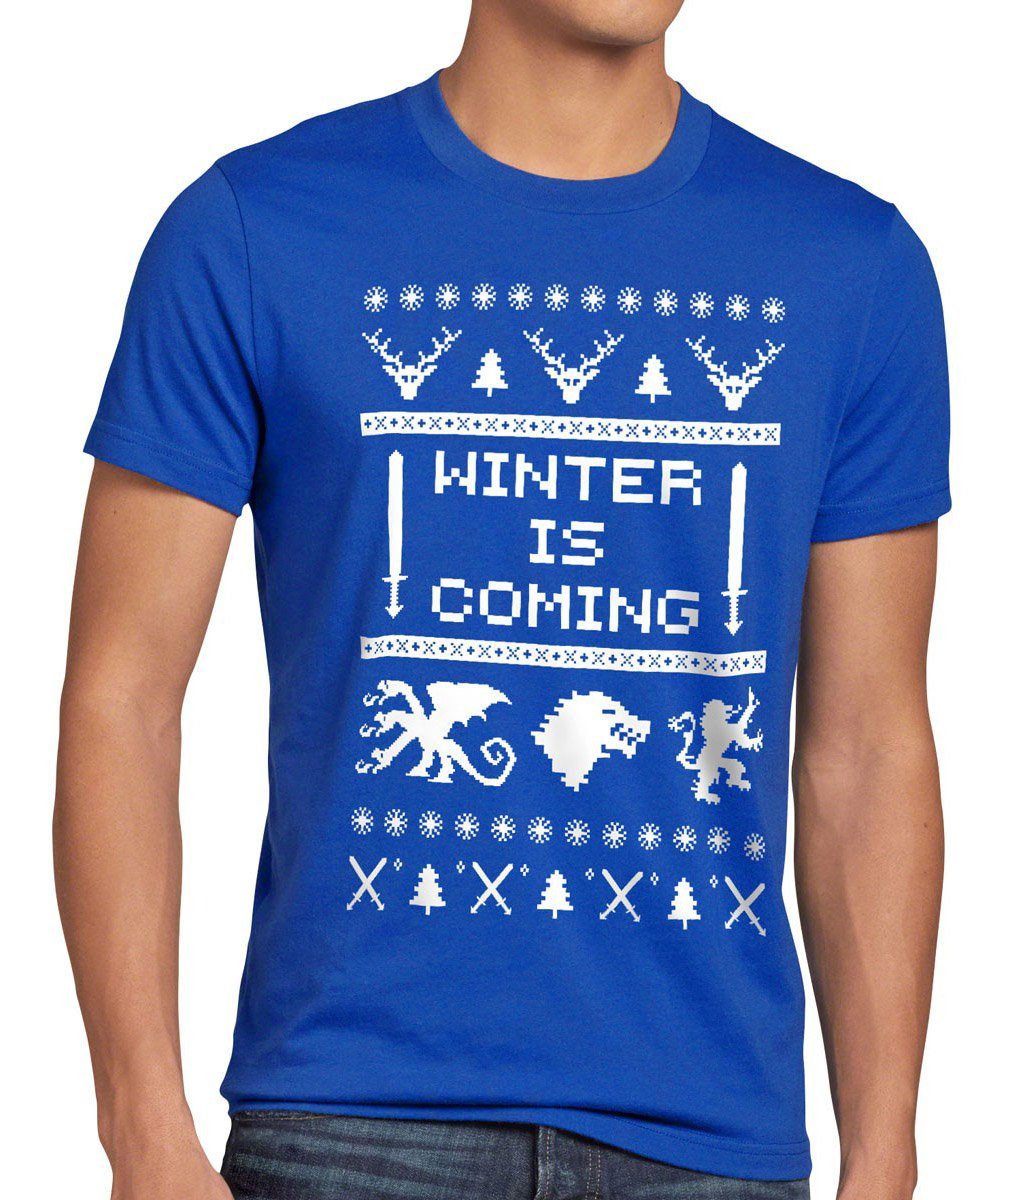 coming style3 Winter 8-Bit got blau T-Shirt stark of game is lennister thrones Print-Shirt Herren schnee